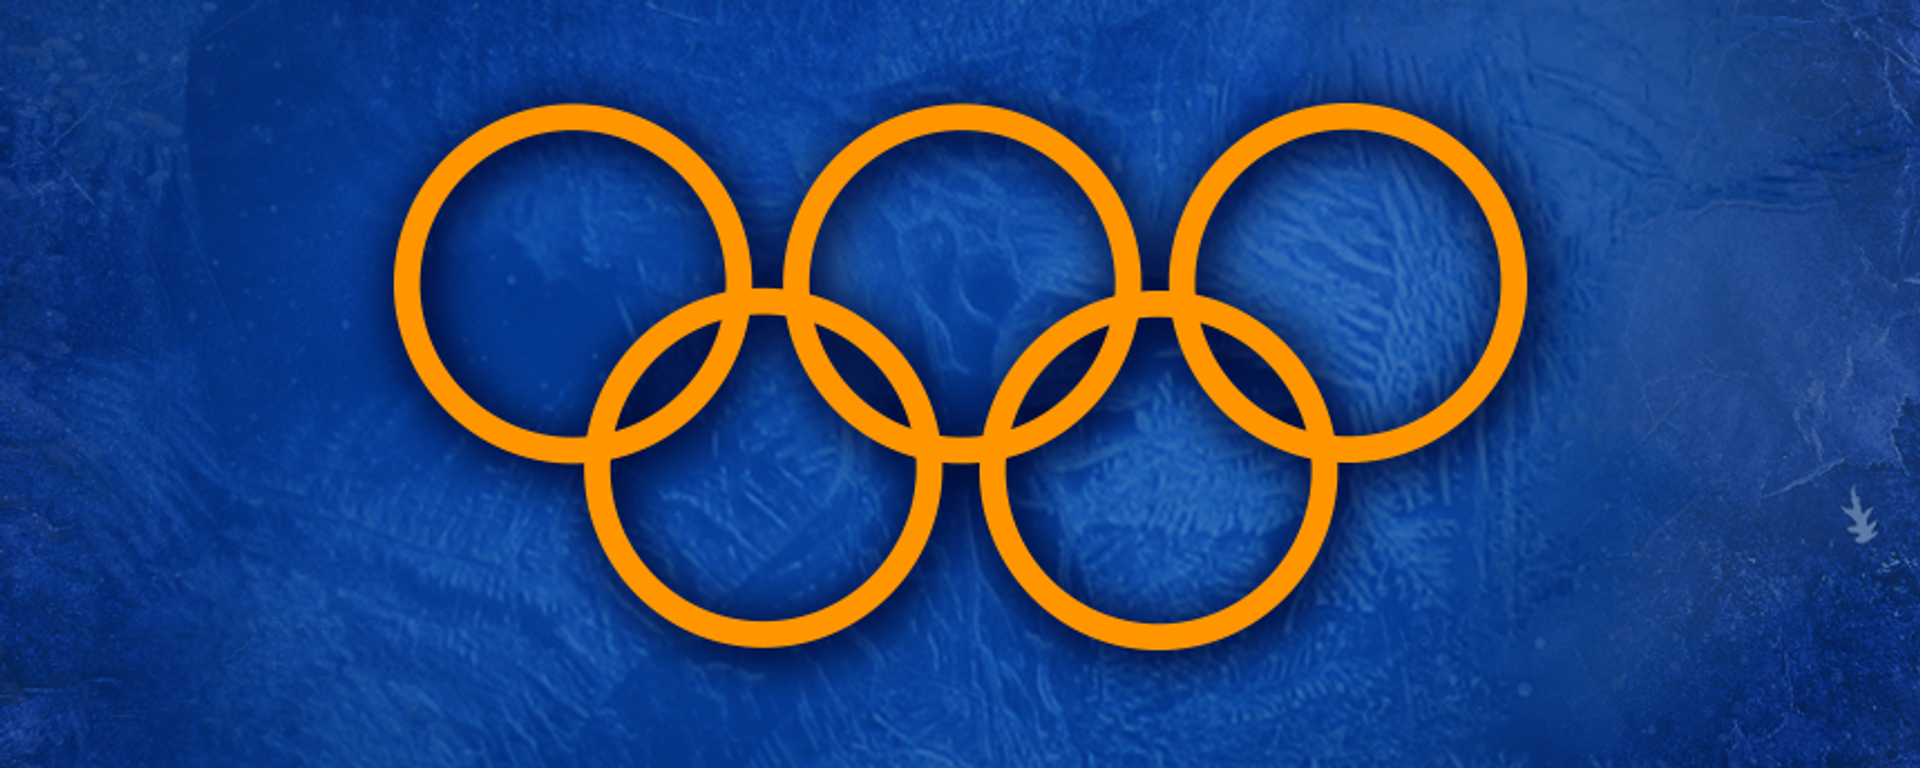 Cum au evoluat sportivii moldoveni la Olimpiada de la Beijing - Sputnik Moldova, 1920, 21.02.2022